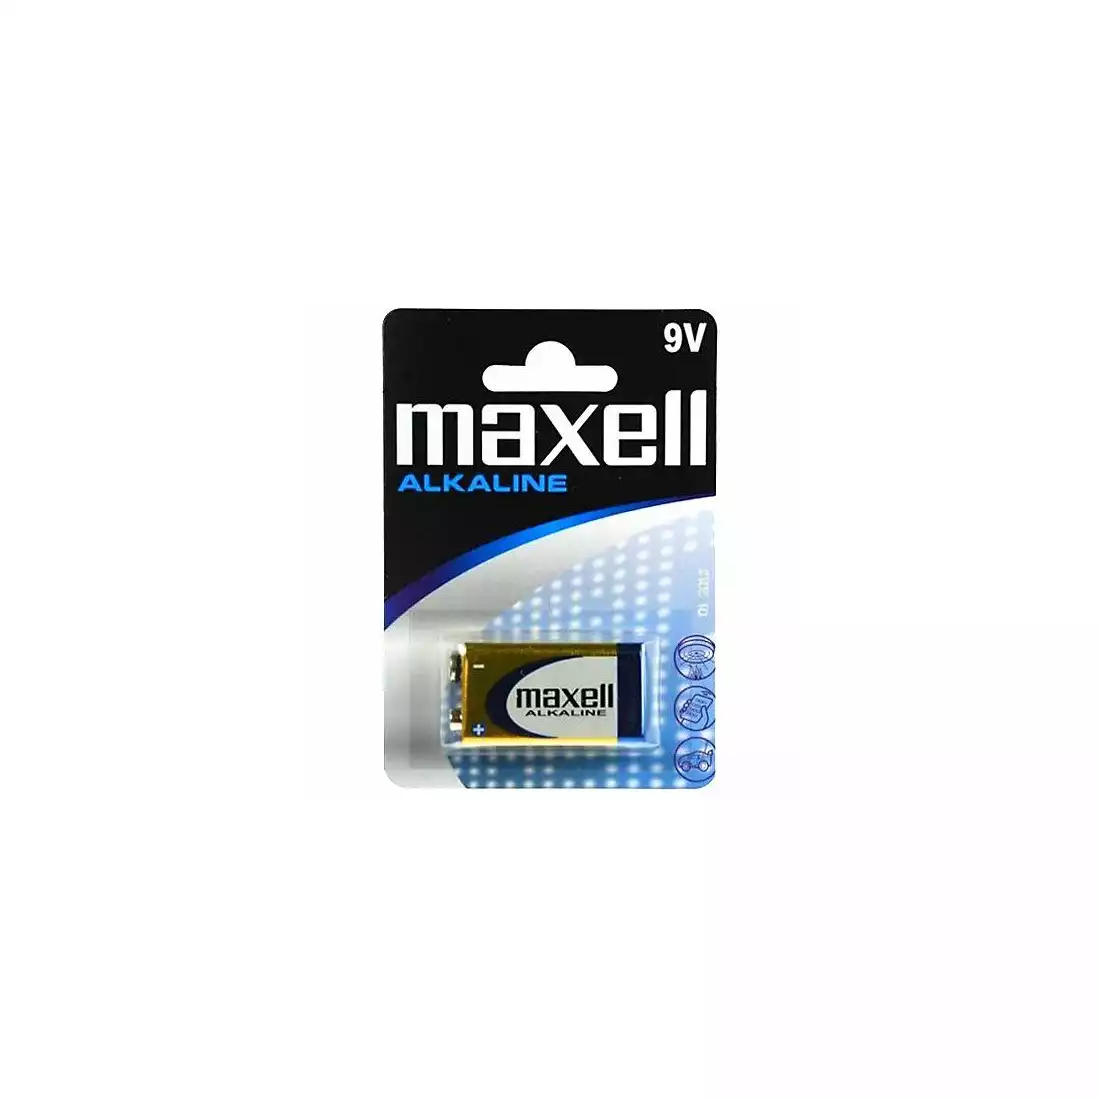 MAXELL LR61 9V alkalická batéria